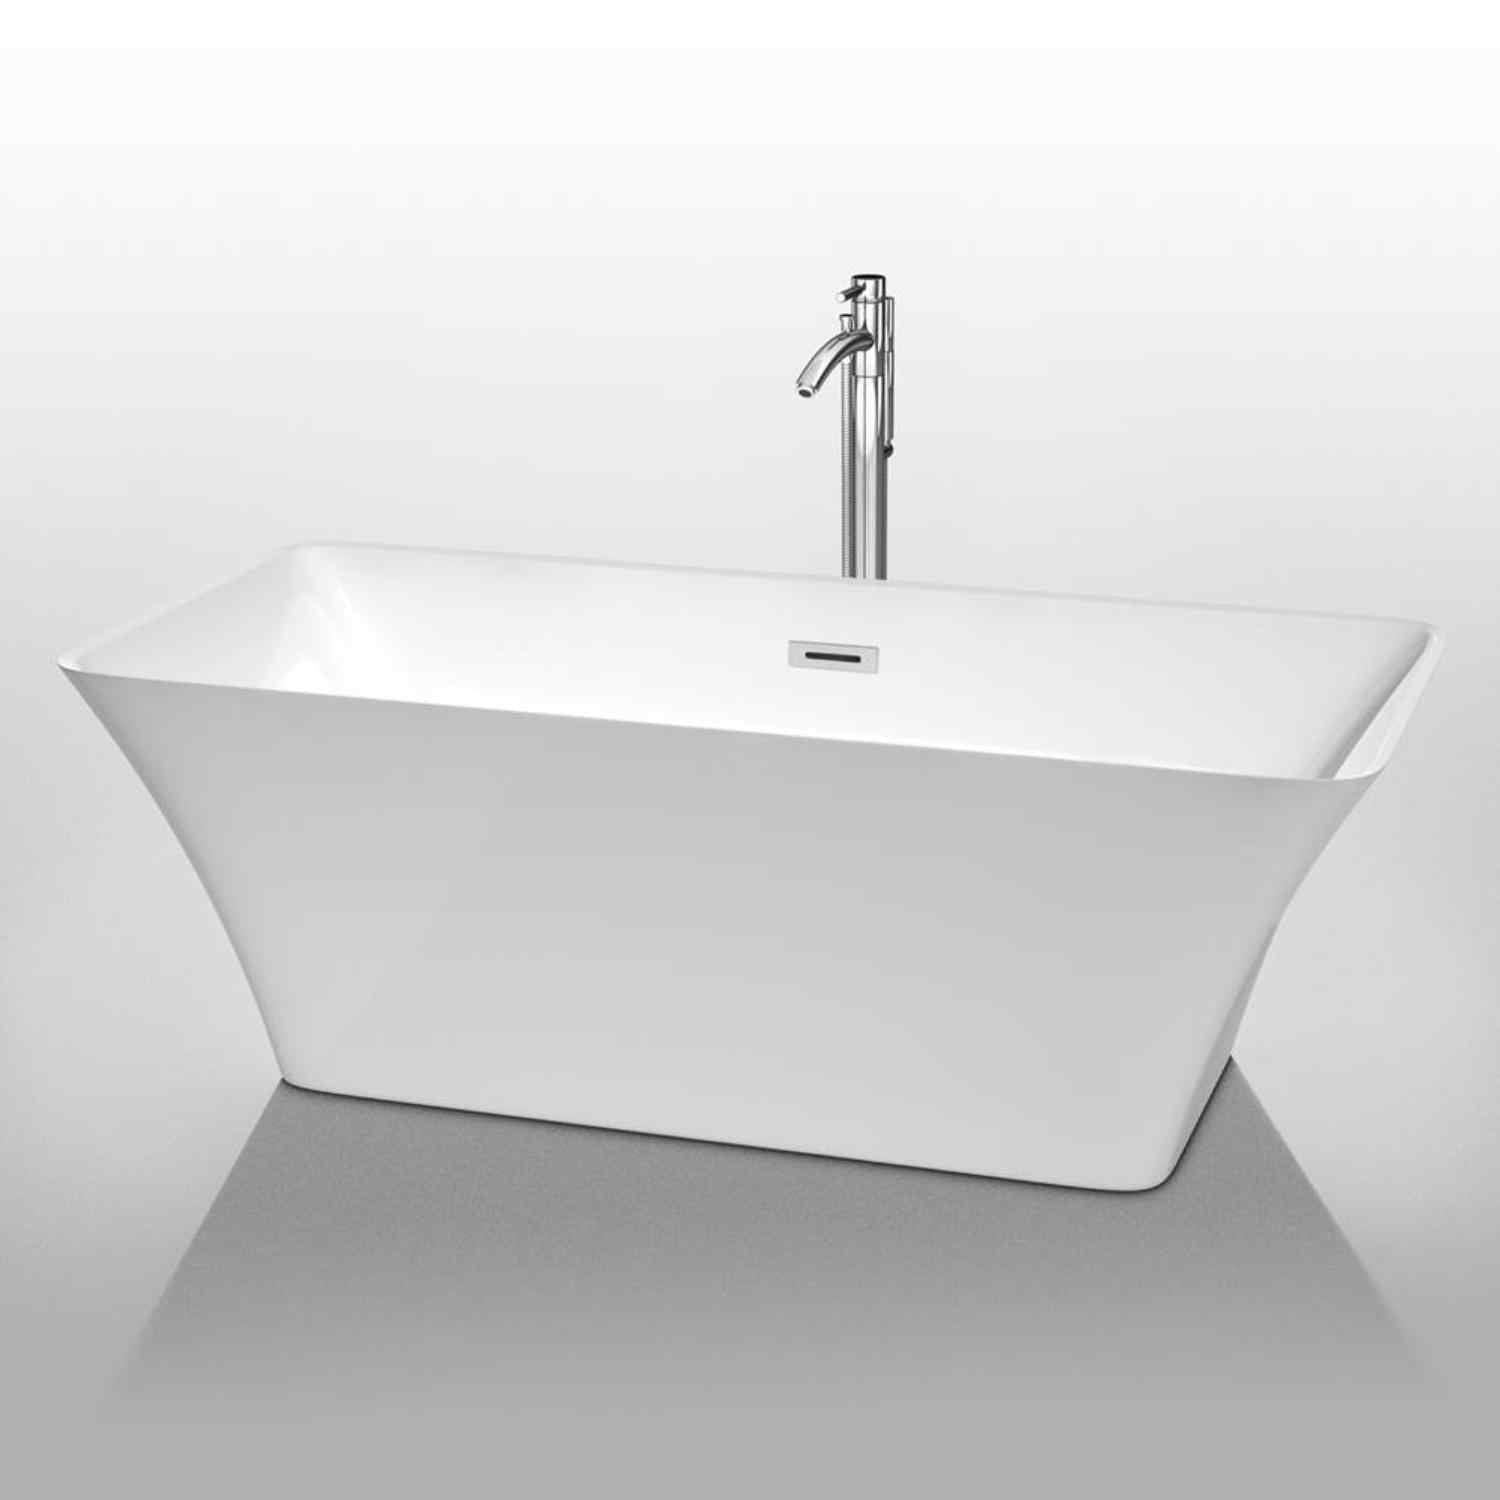 Wyndham collection Tiffany 67 Inch Freestanding Bathtub in White chrome